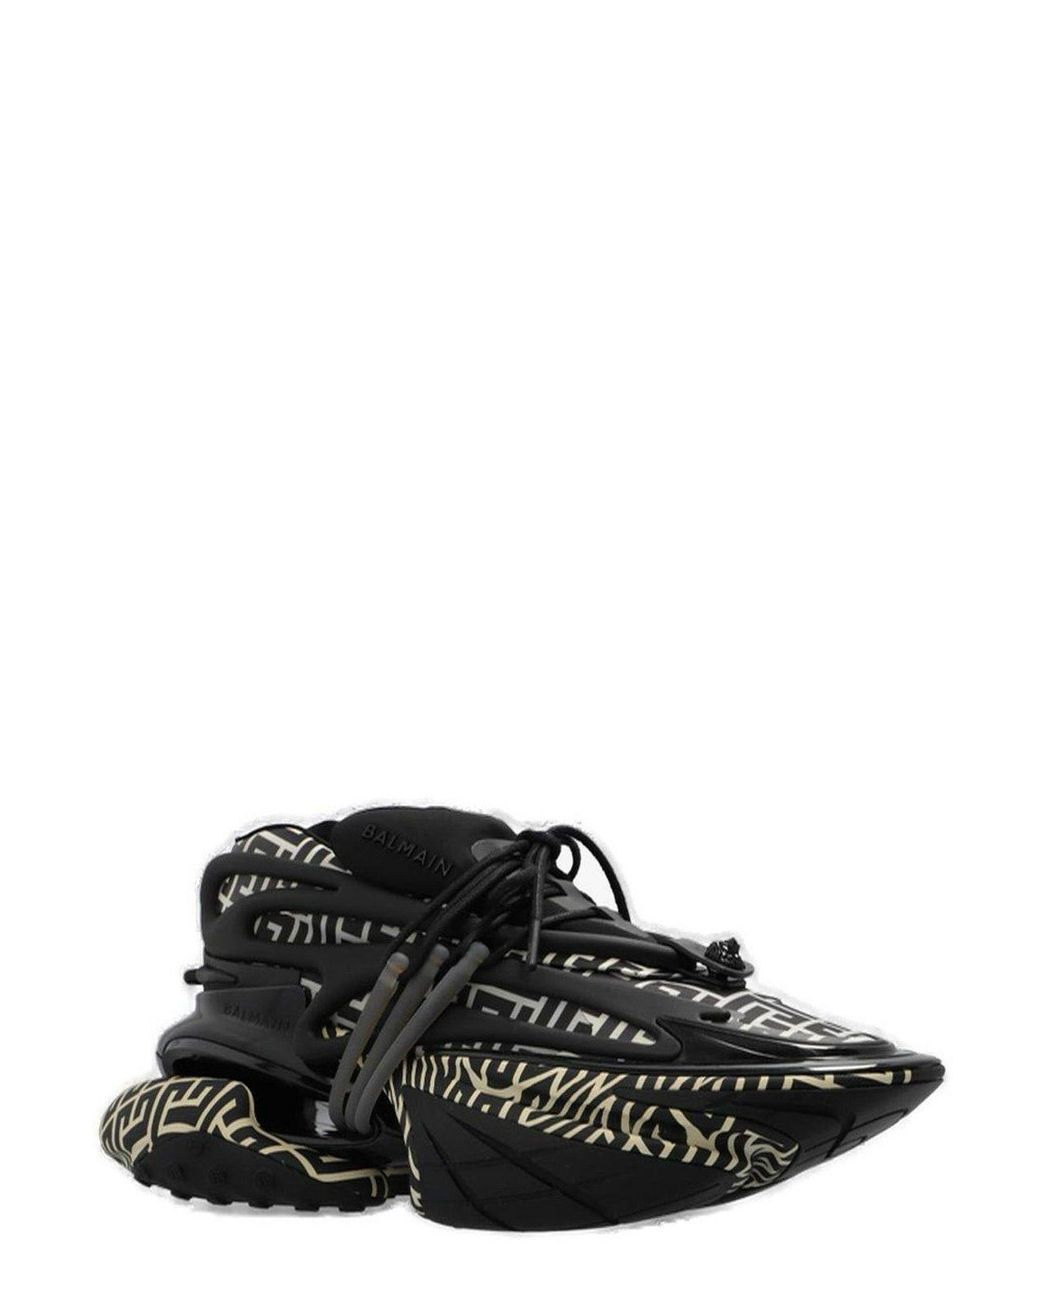 Balmain Unicorn Lace-up Sneakers in Black for Men | Lyst